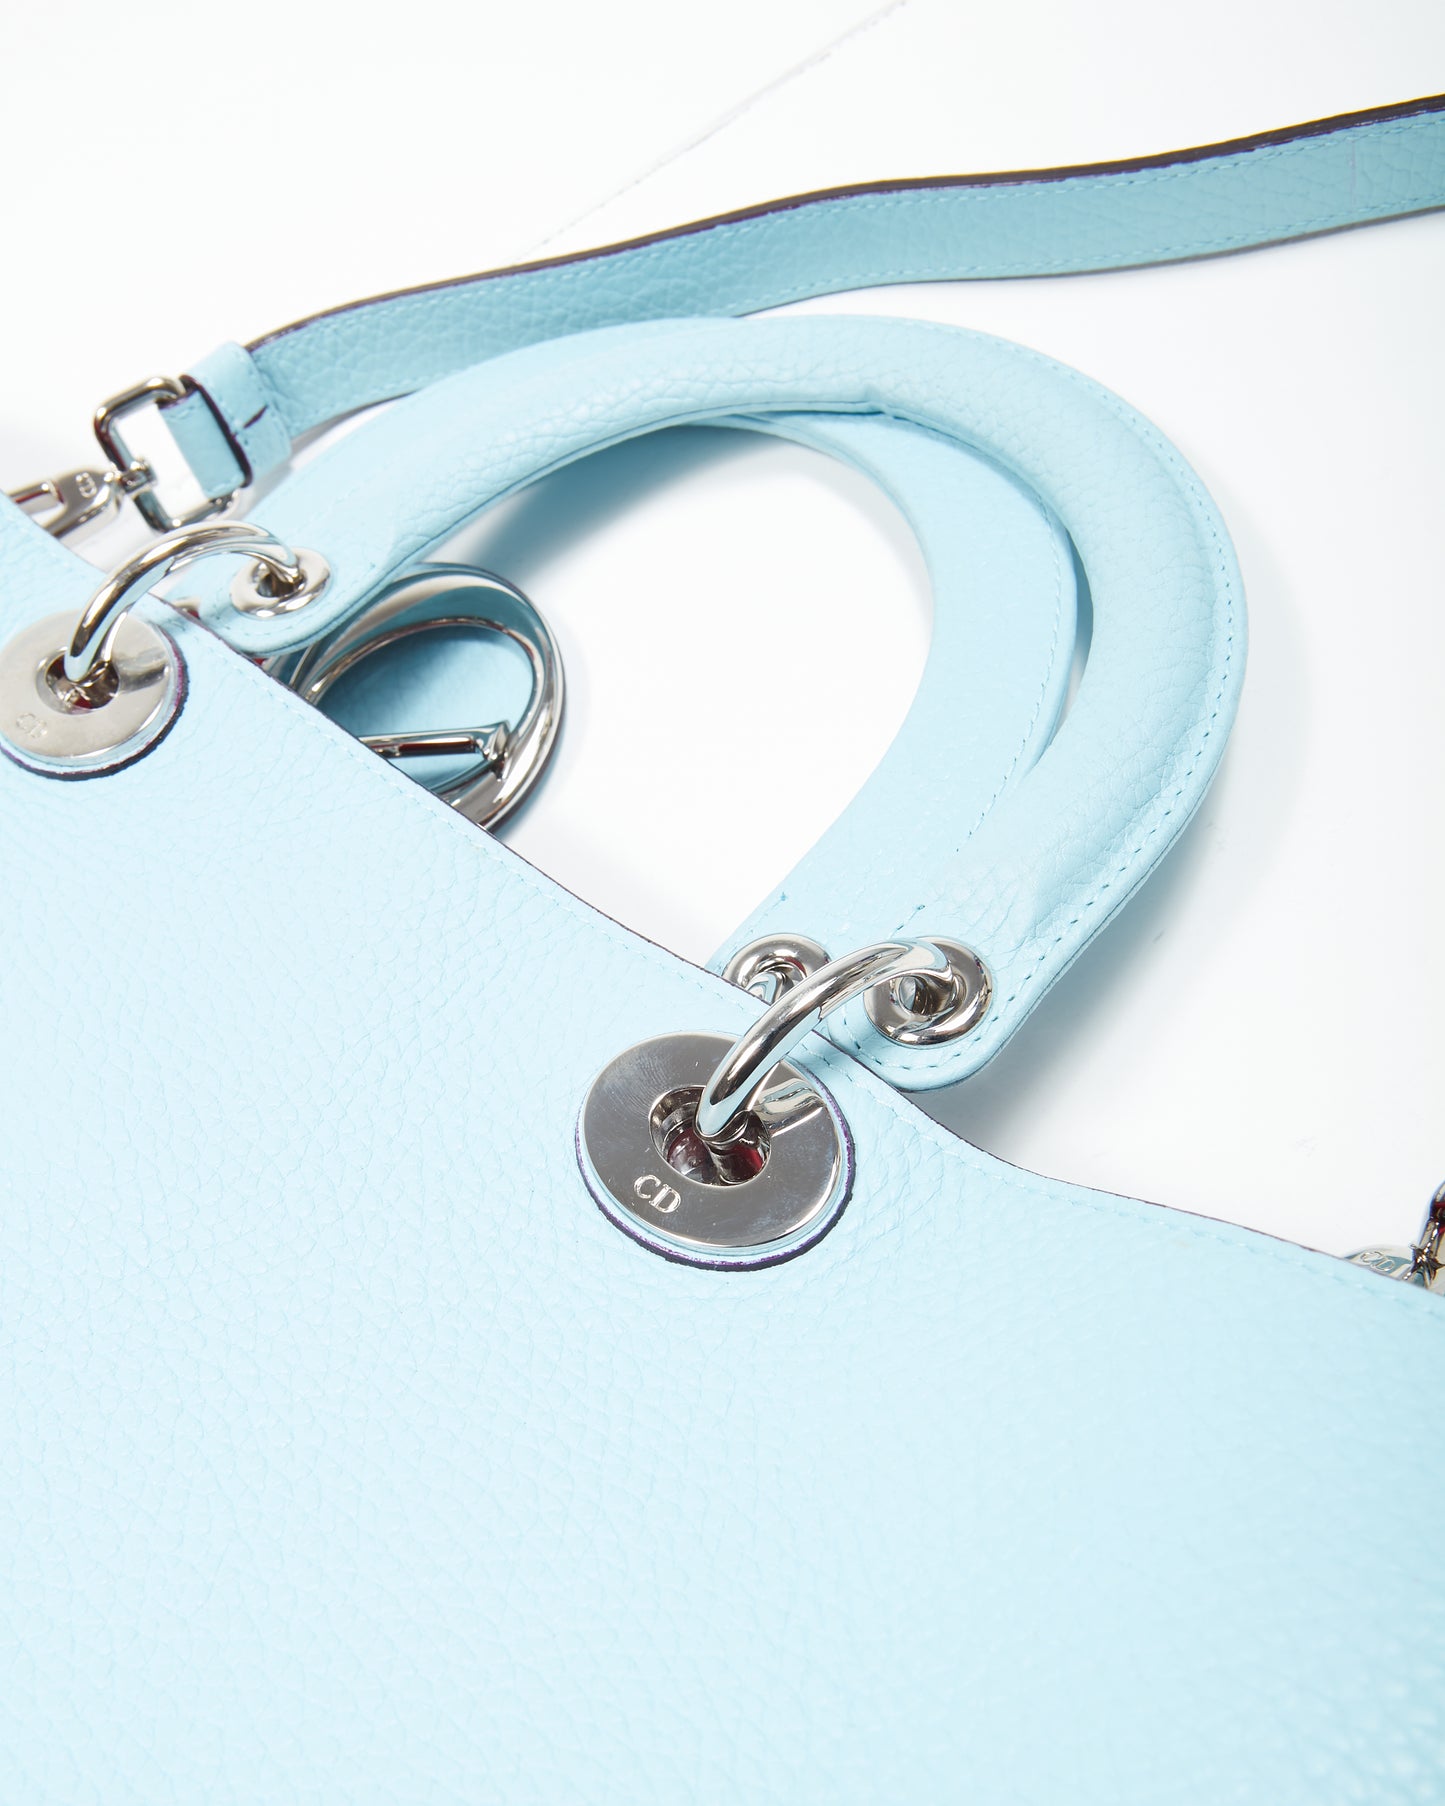 Dior Tiffany Blue Dior Pebbled Leather Diorissimo Large Tote Bag